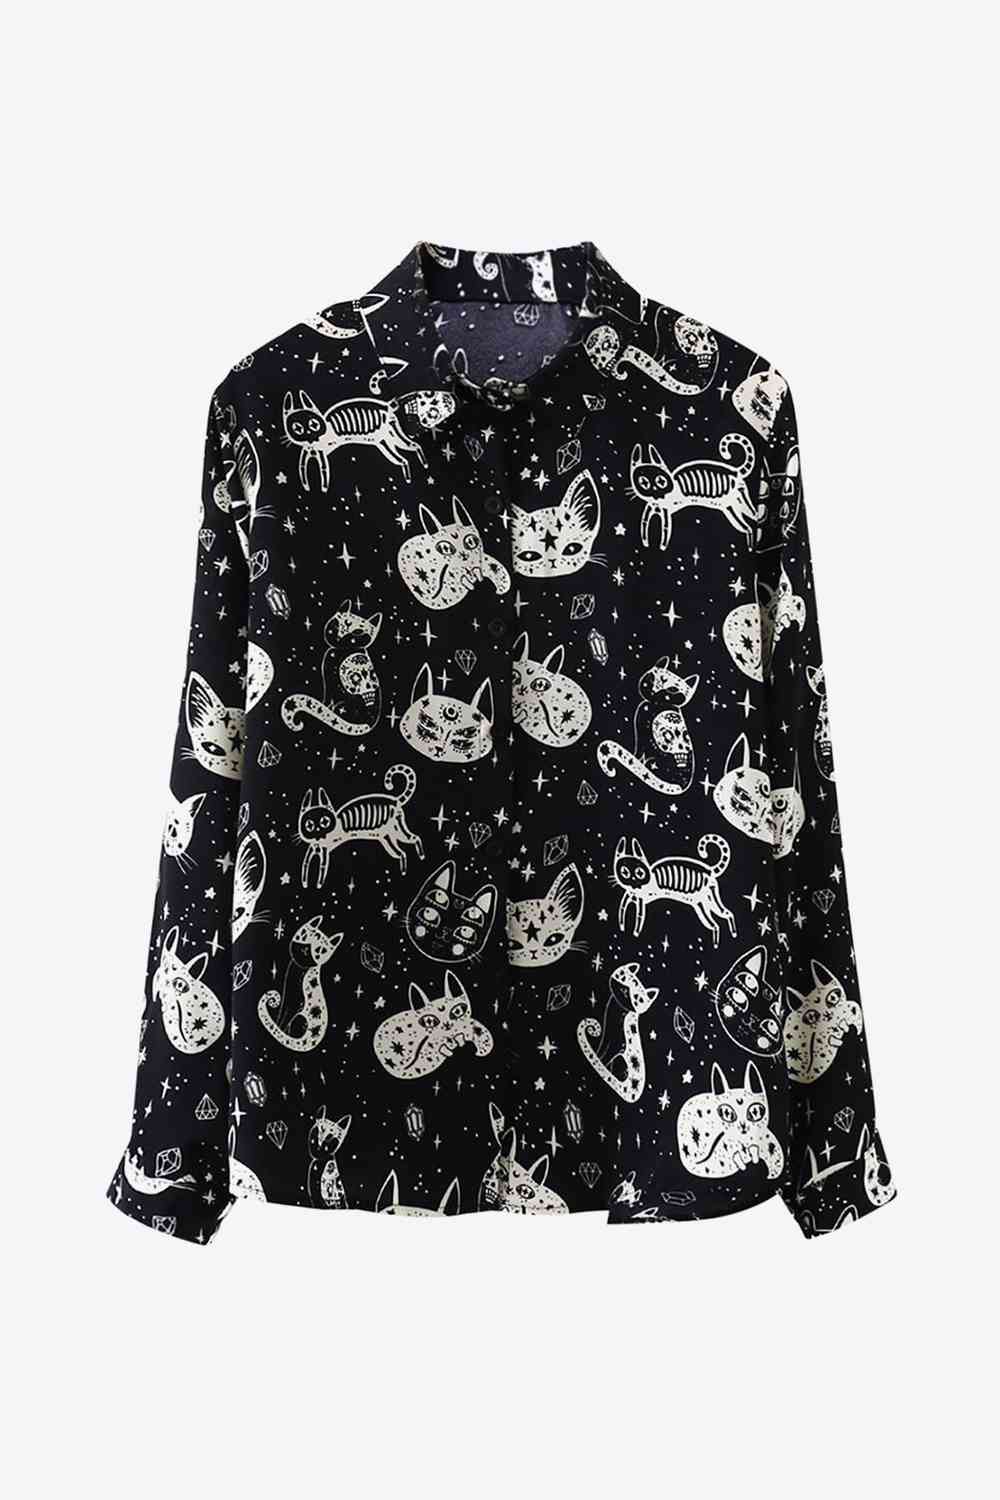 Cat Print Button-Up Black Shirt